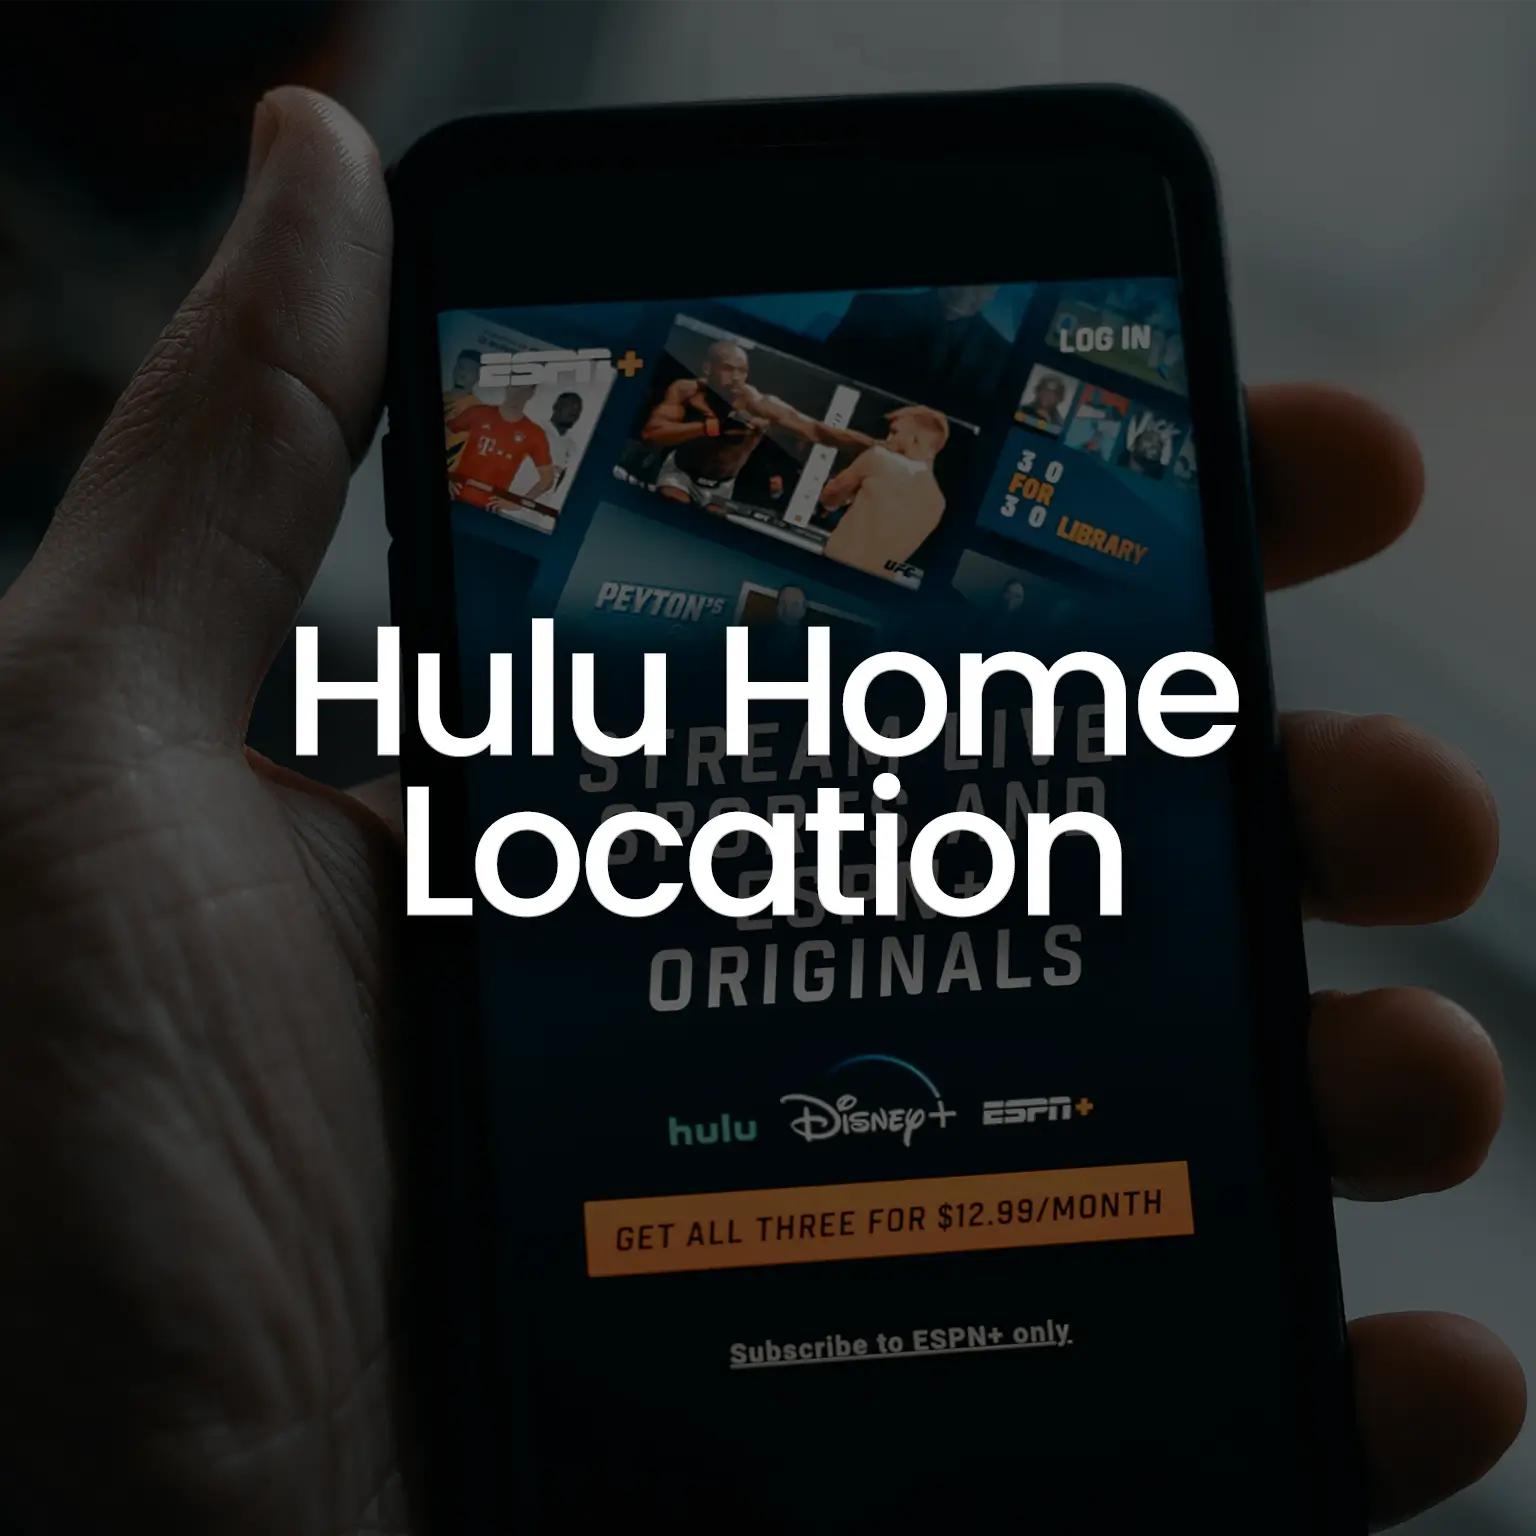 Hulu Home Location